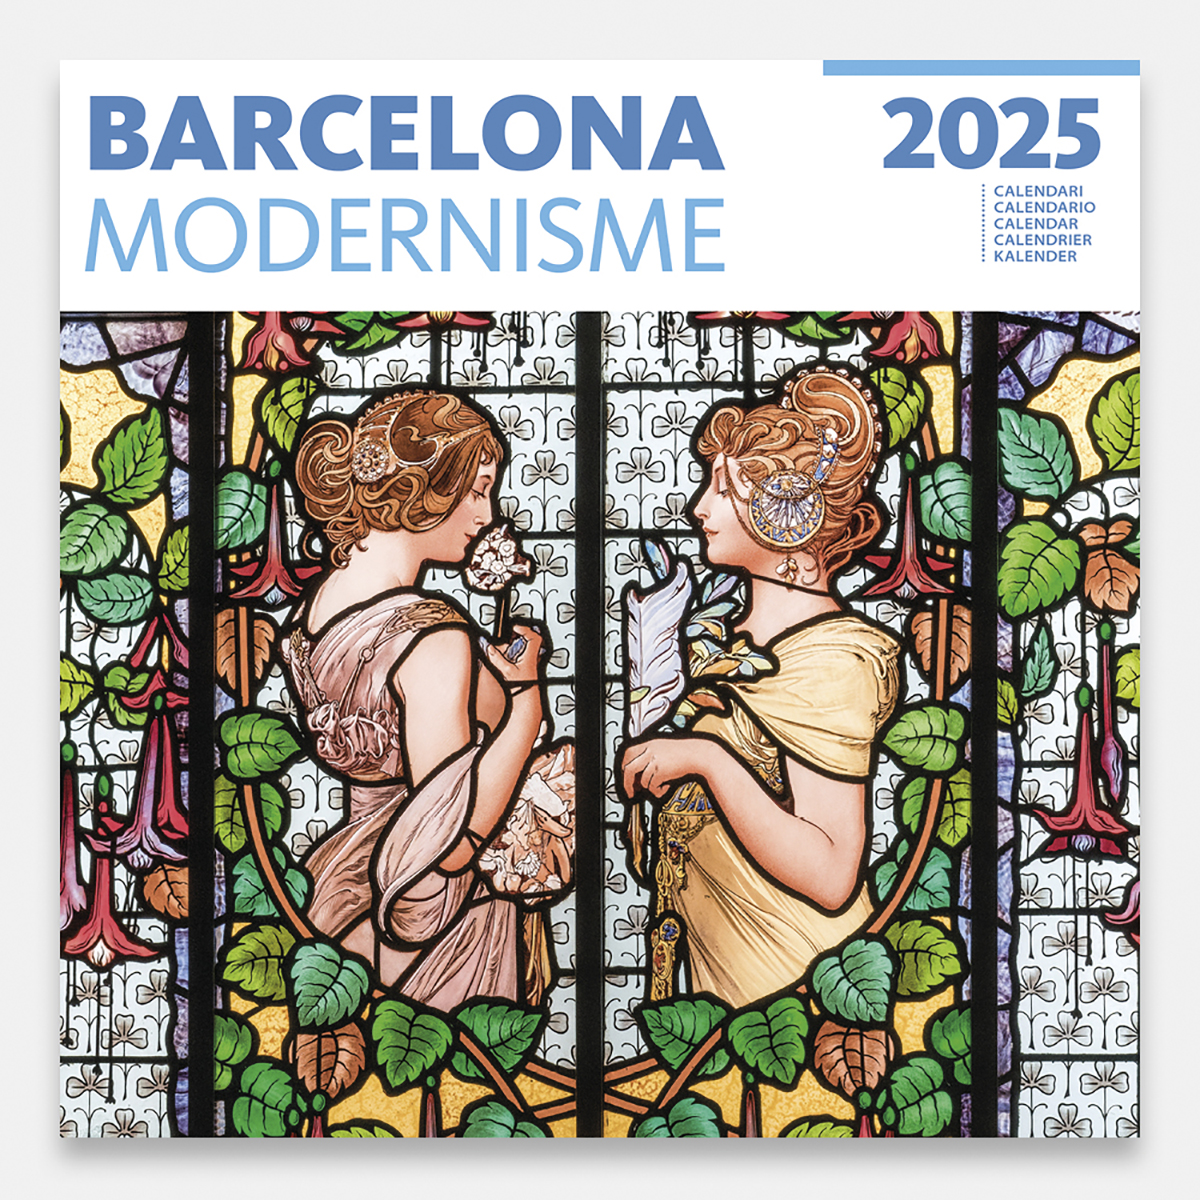 Calendario 2025 Modernismo 25modg calendario pared 2025 barcelona modernismo modernisme